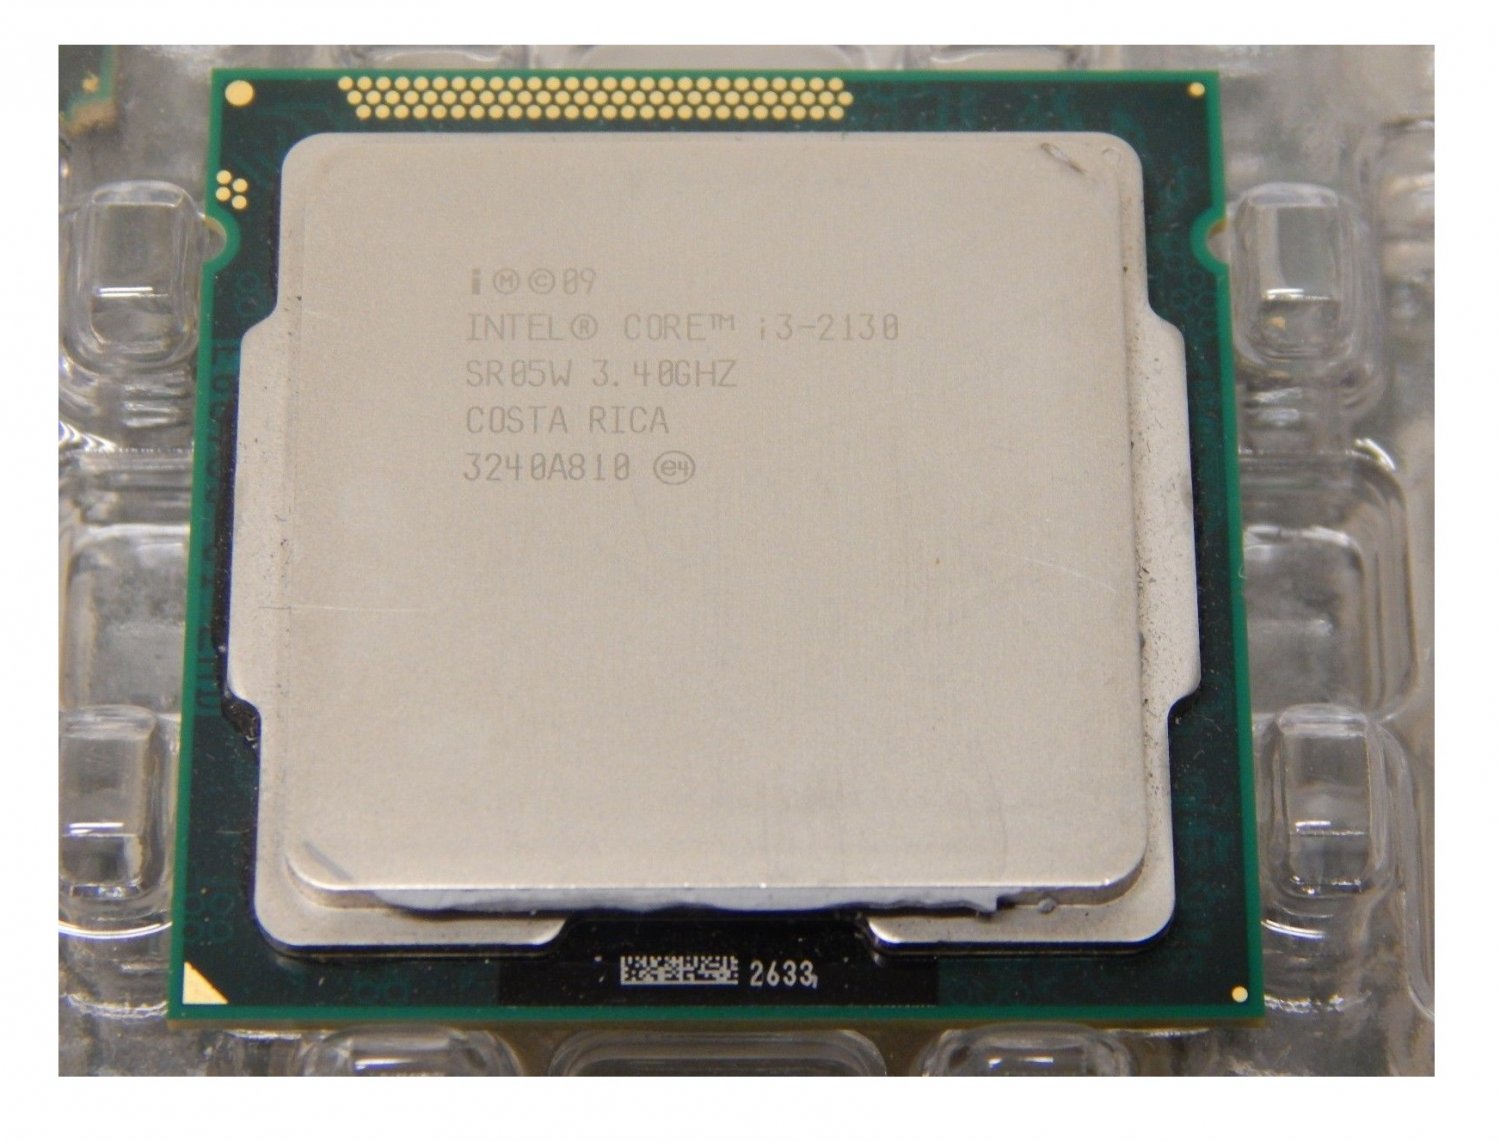 Genuine Intel Dual-Core i3-2130 3.40GHz 3M Socket1155 Processor LGA1155-SR05W